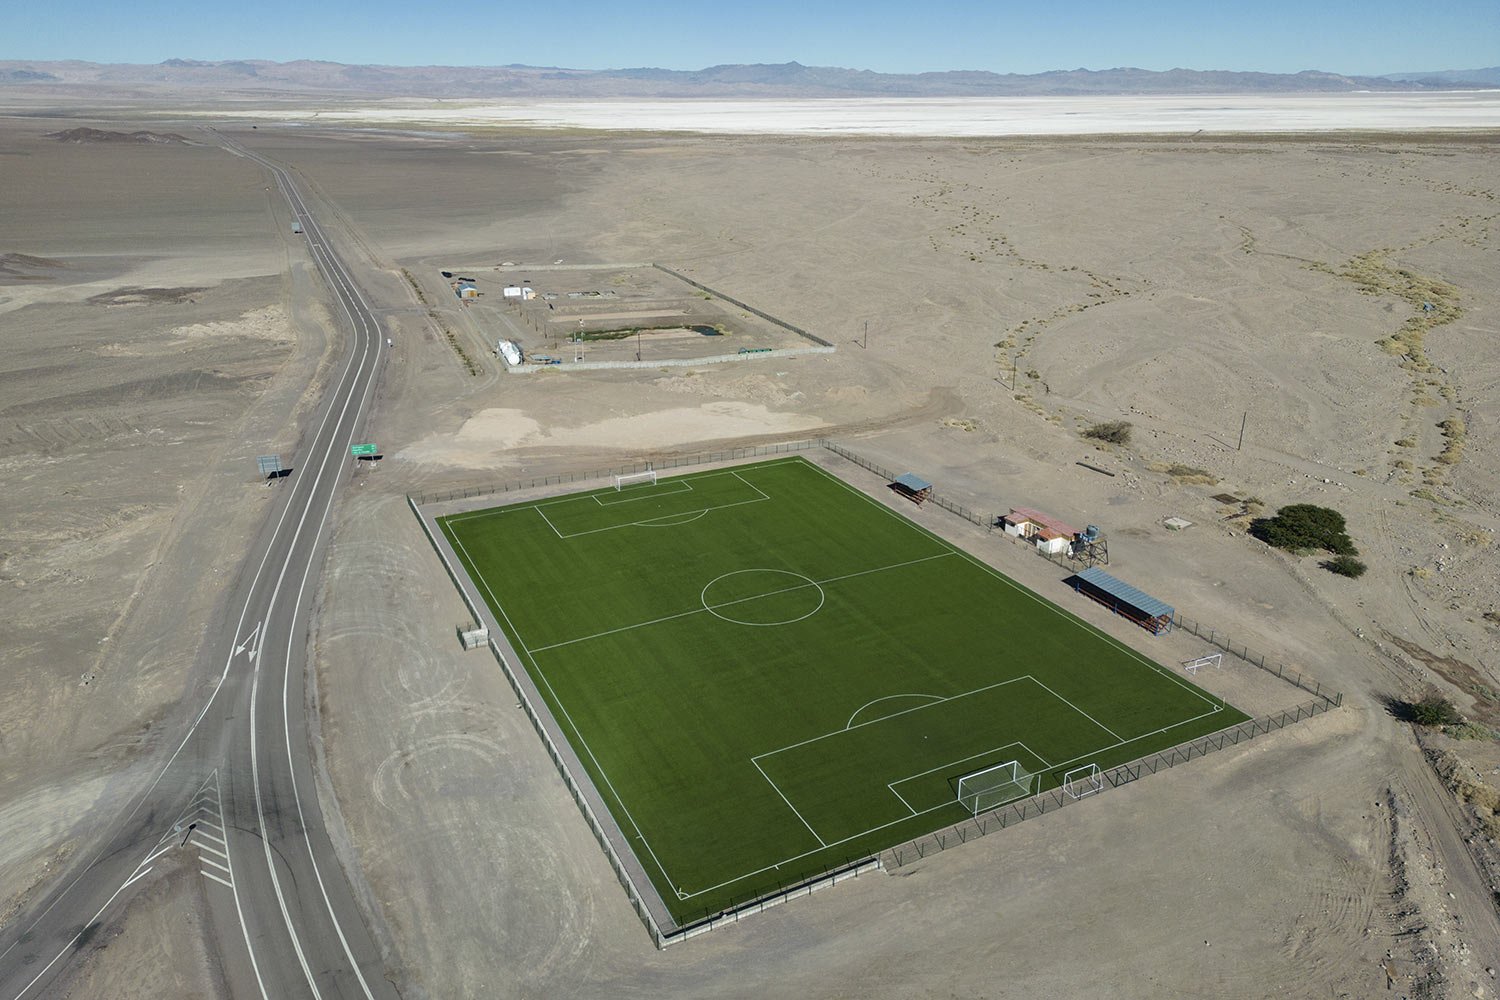  A soccer field sits in the desert near Peine, Chile, April 20, 2023. (AP Photo/Rodrigo Abd) 